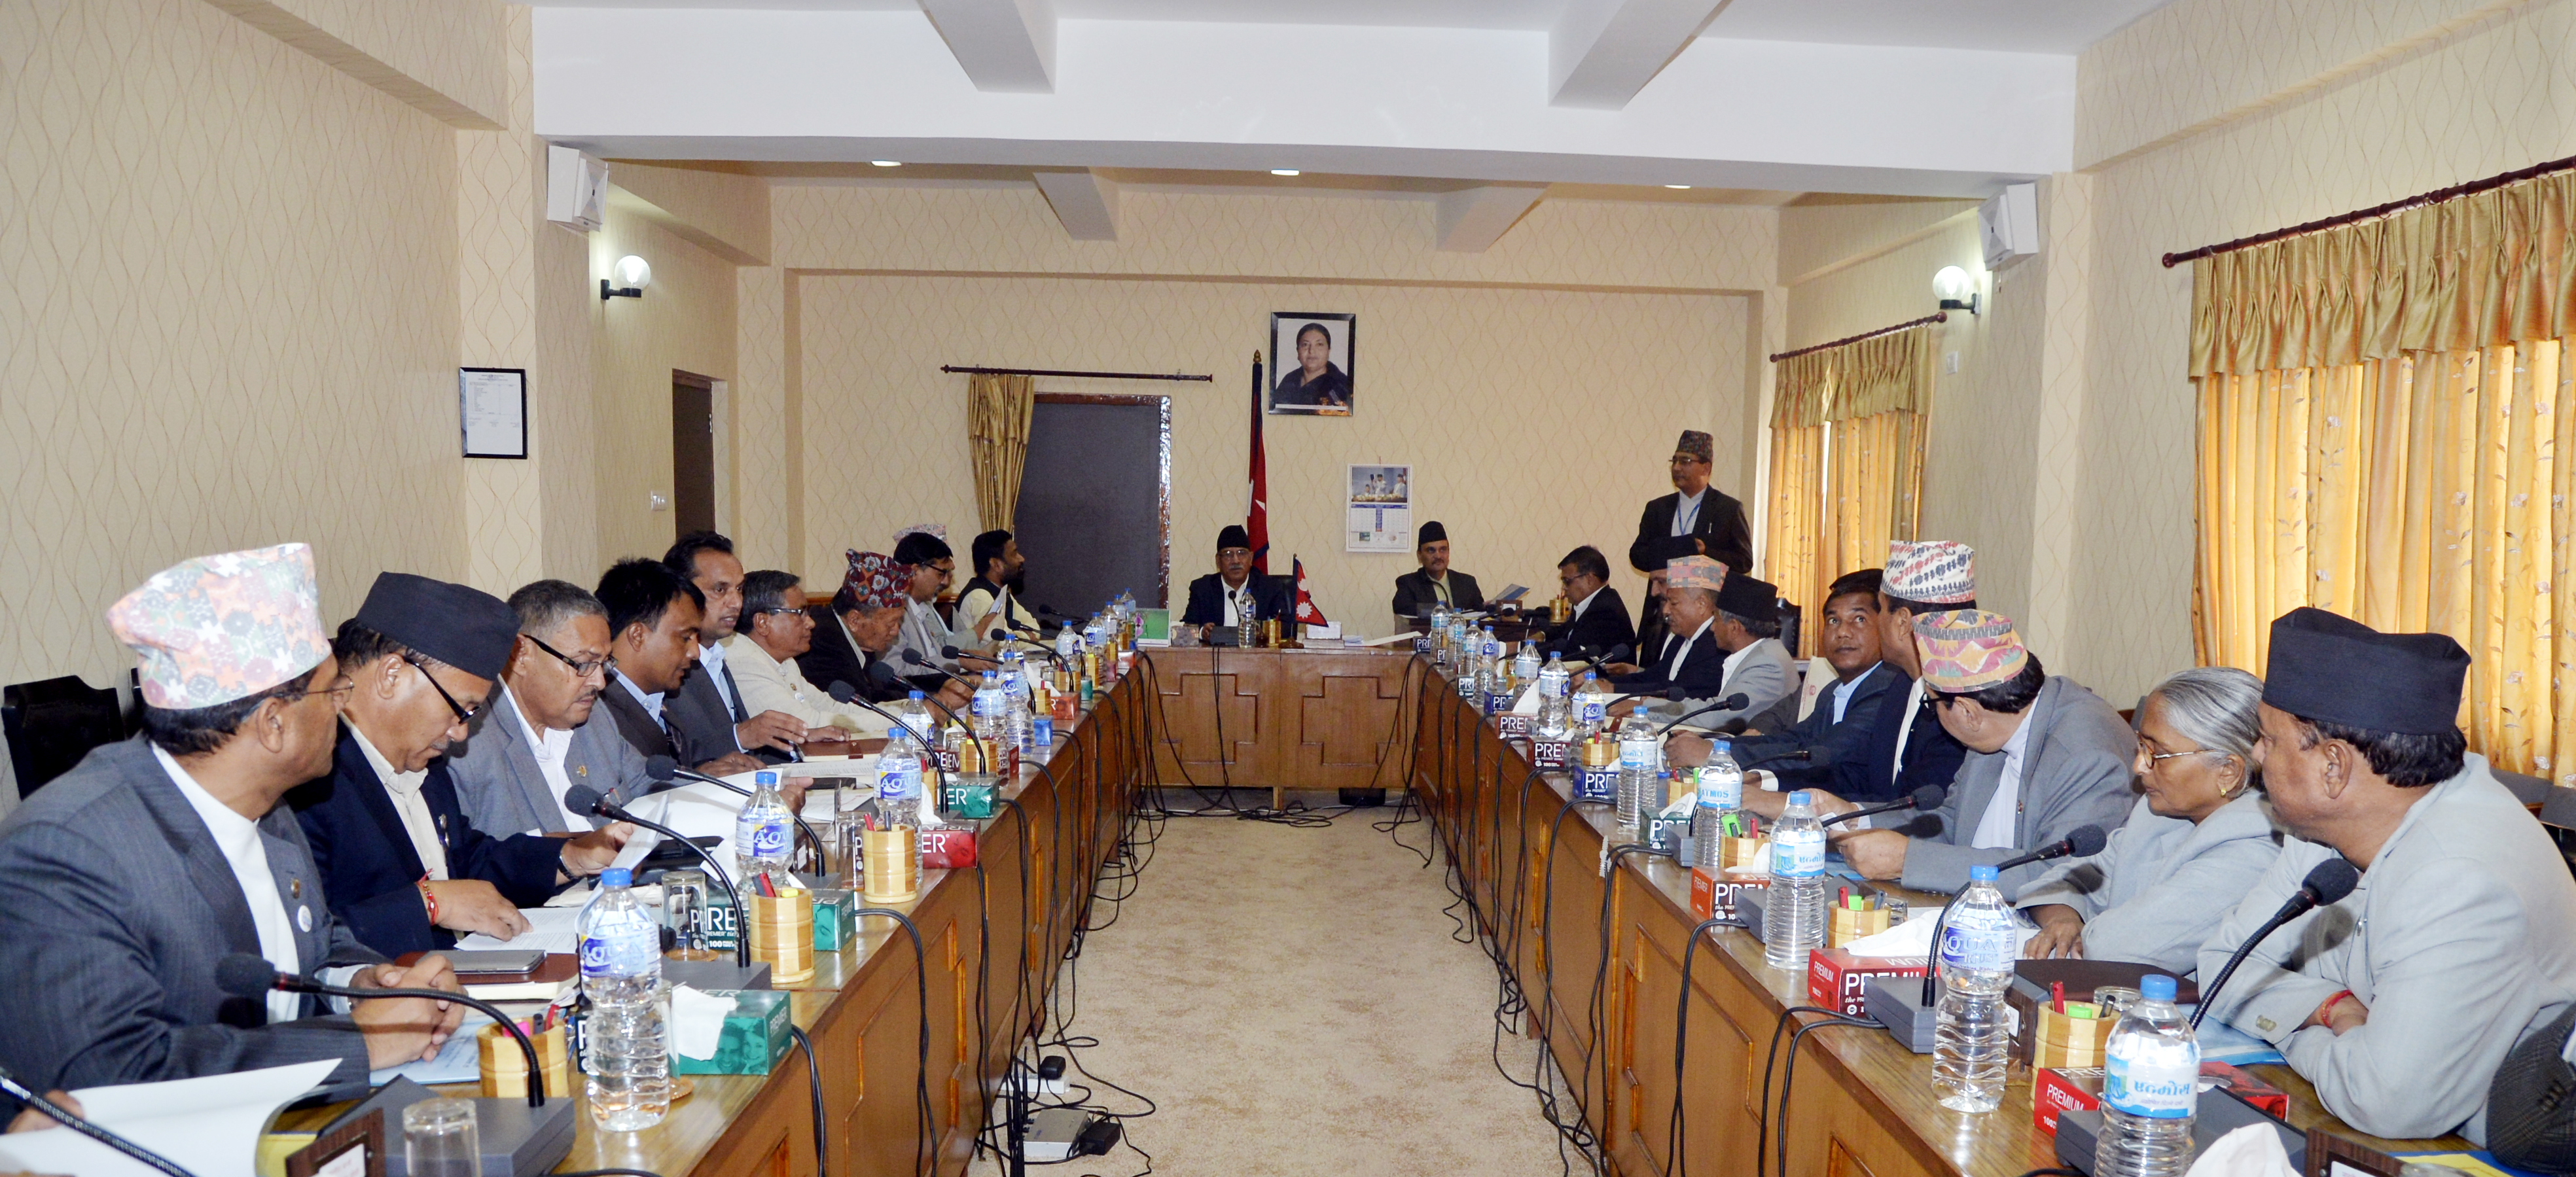 मन्त्रीपरिषद बैठकः नेतृत्व मूल्यांकन समिति गठन